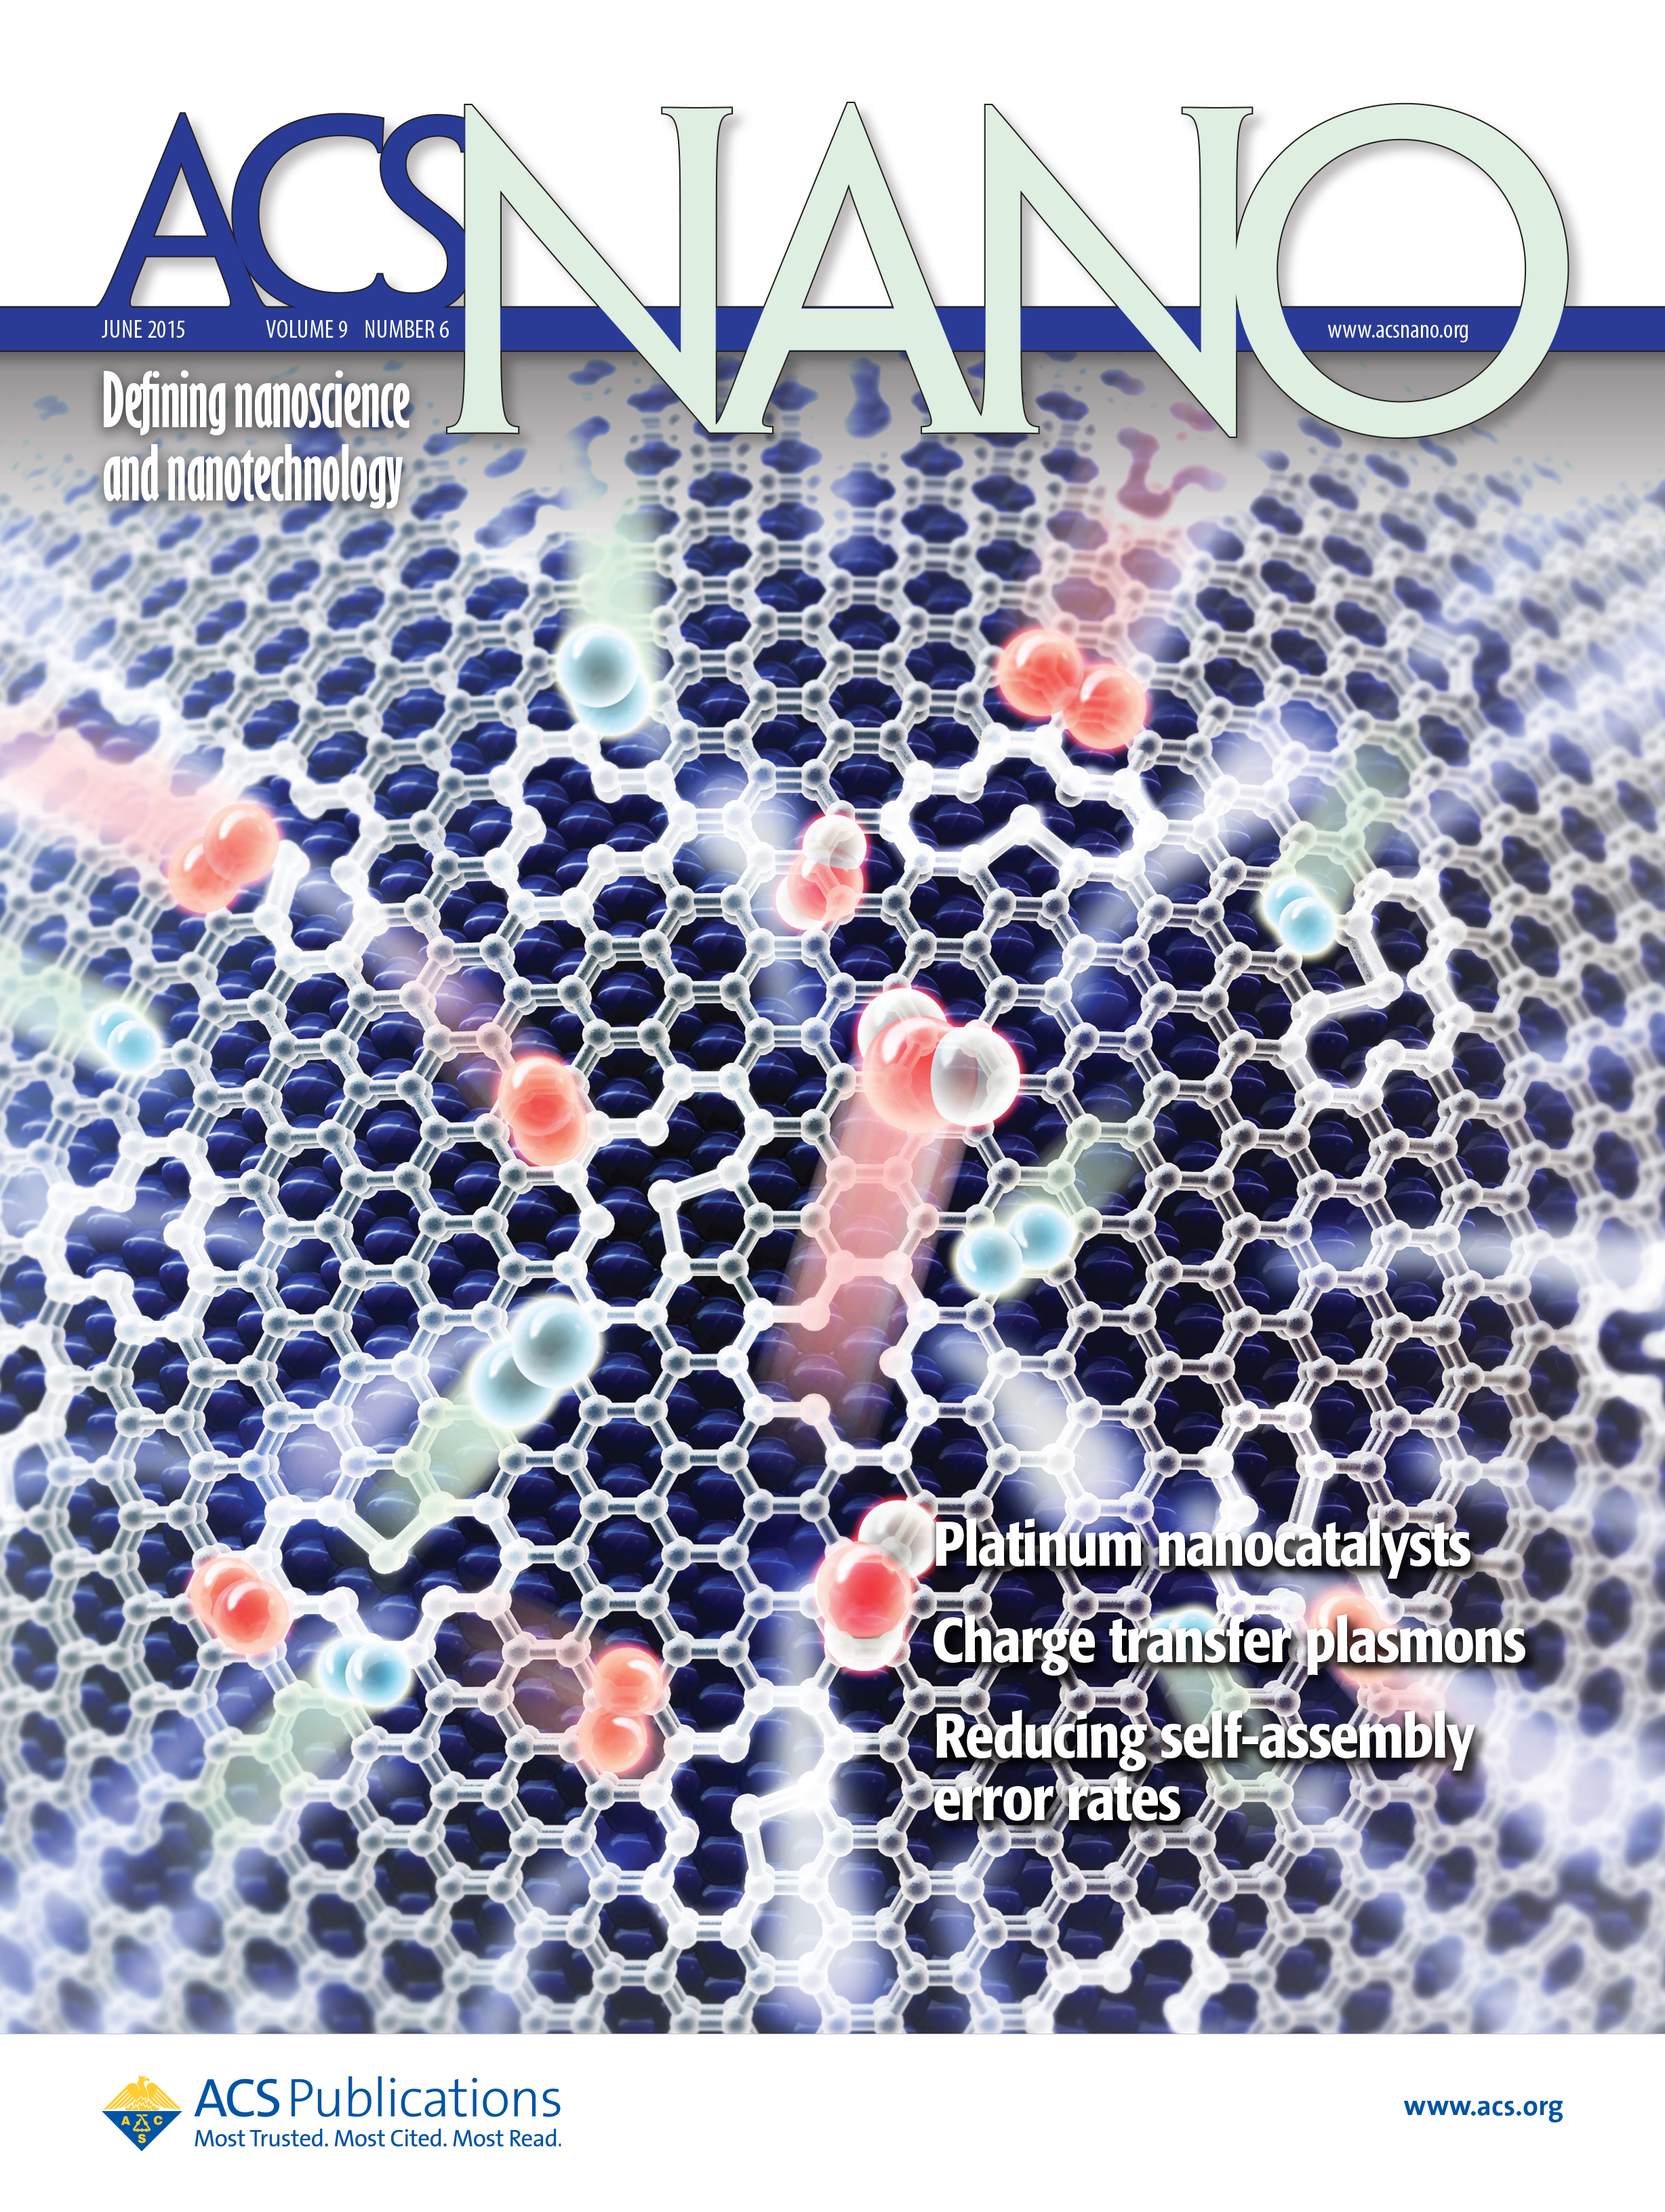 Cover page for ACS Nano